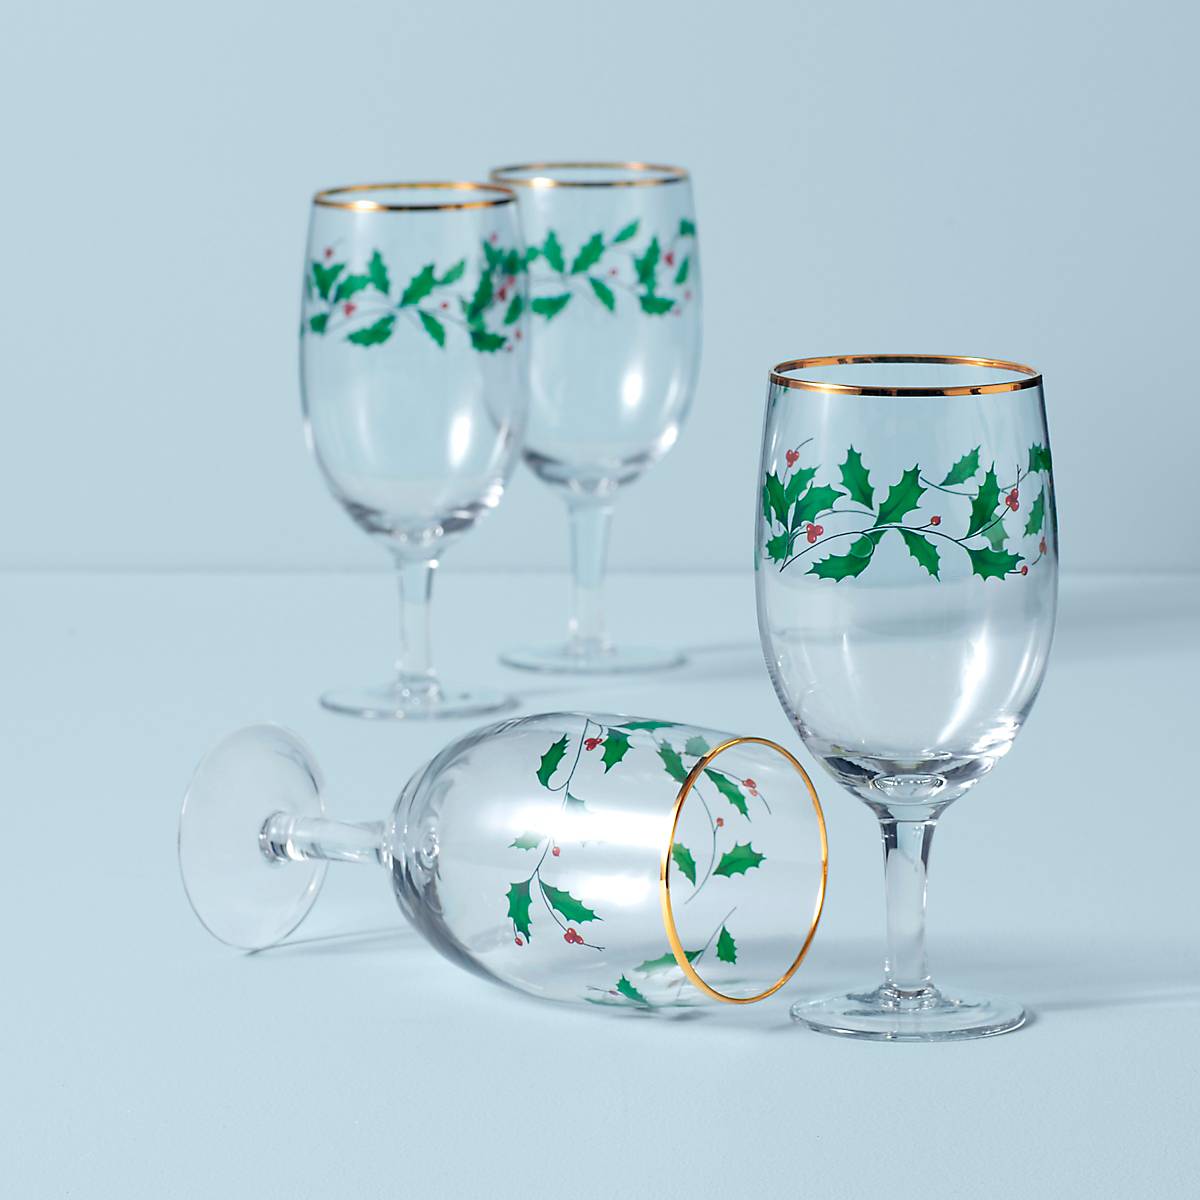 Lenox Holiday 4-Piece Highball Glass Set